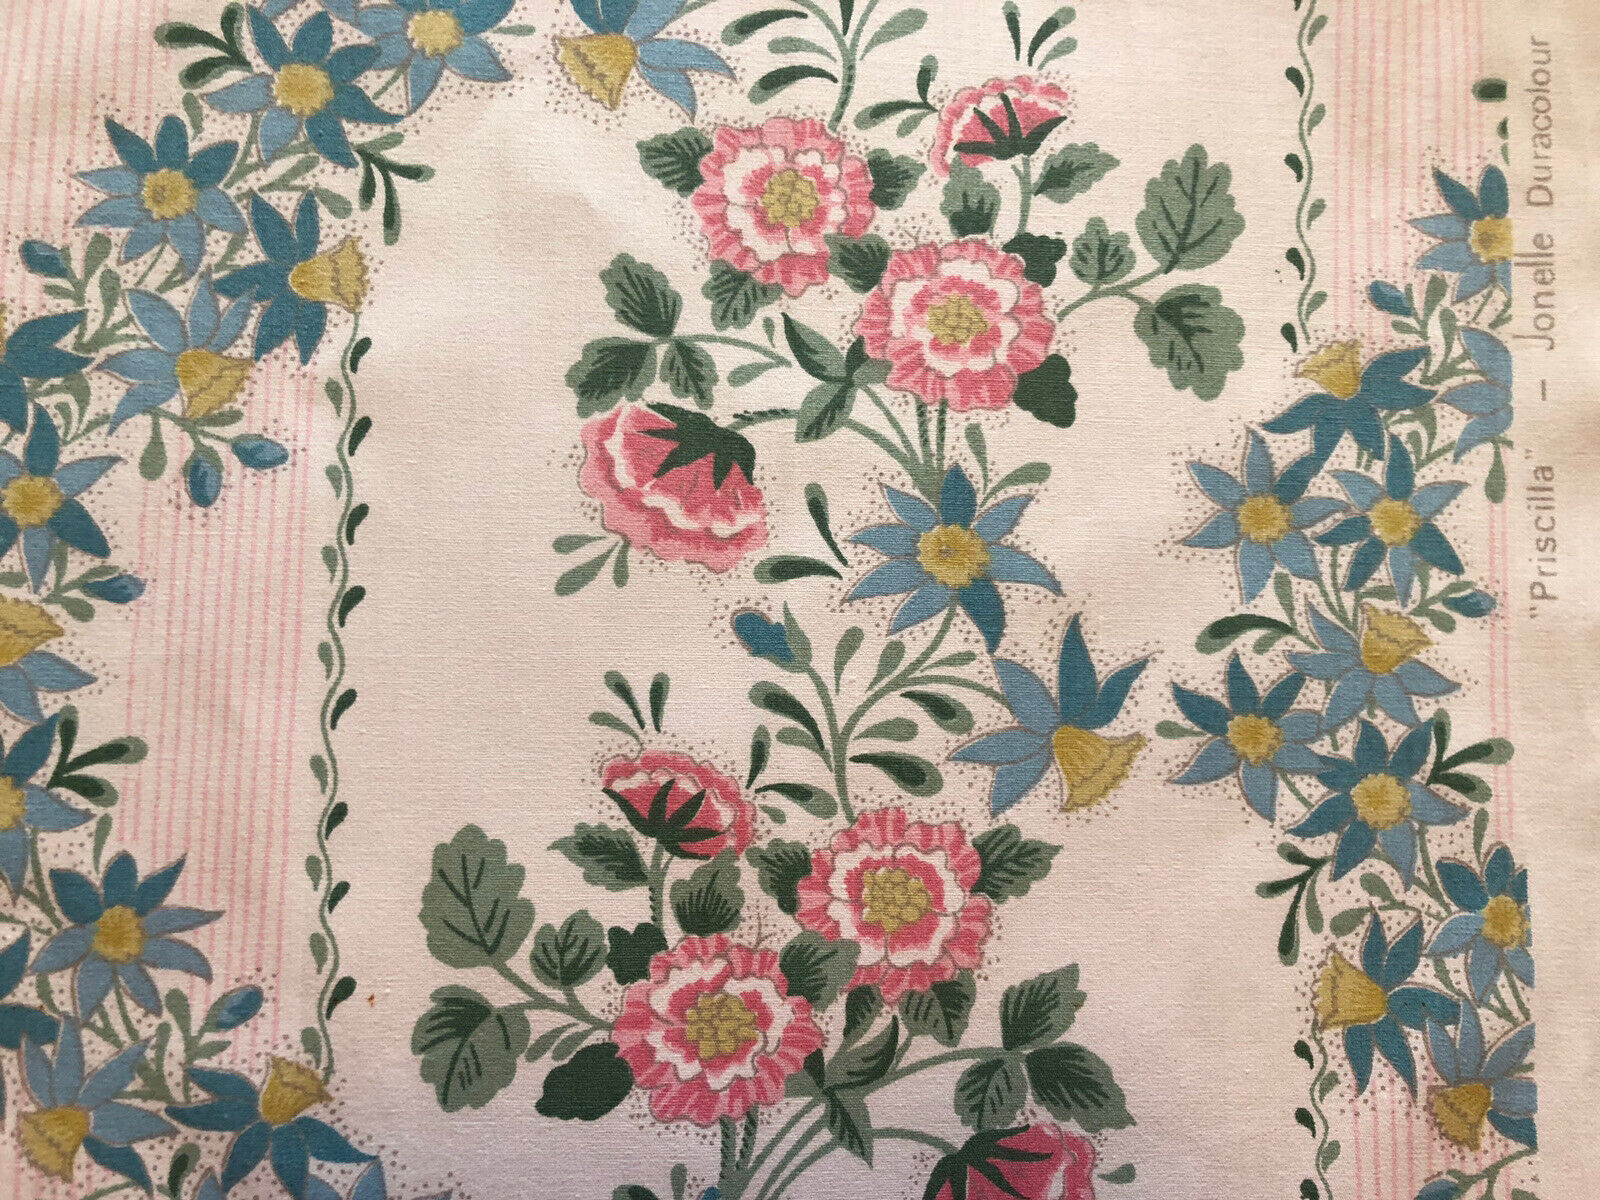 Jonelle 1971 ‘Priscilla’ Pink&Teal Floral Cotton Fabric Panel Original 35x30cm